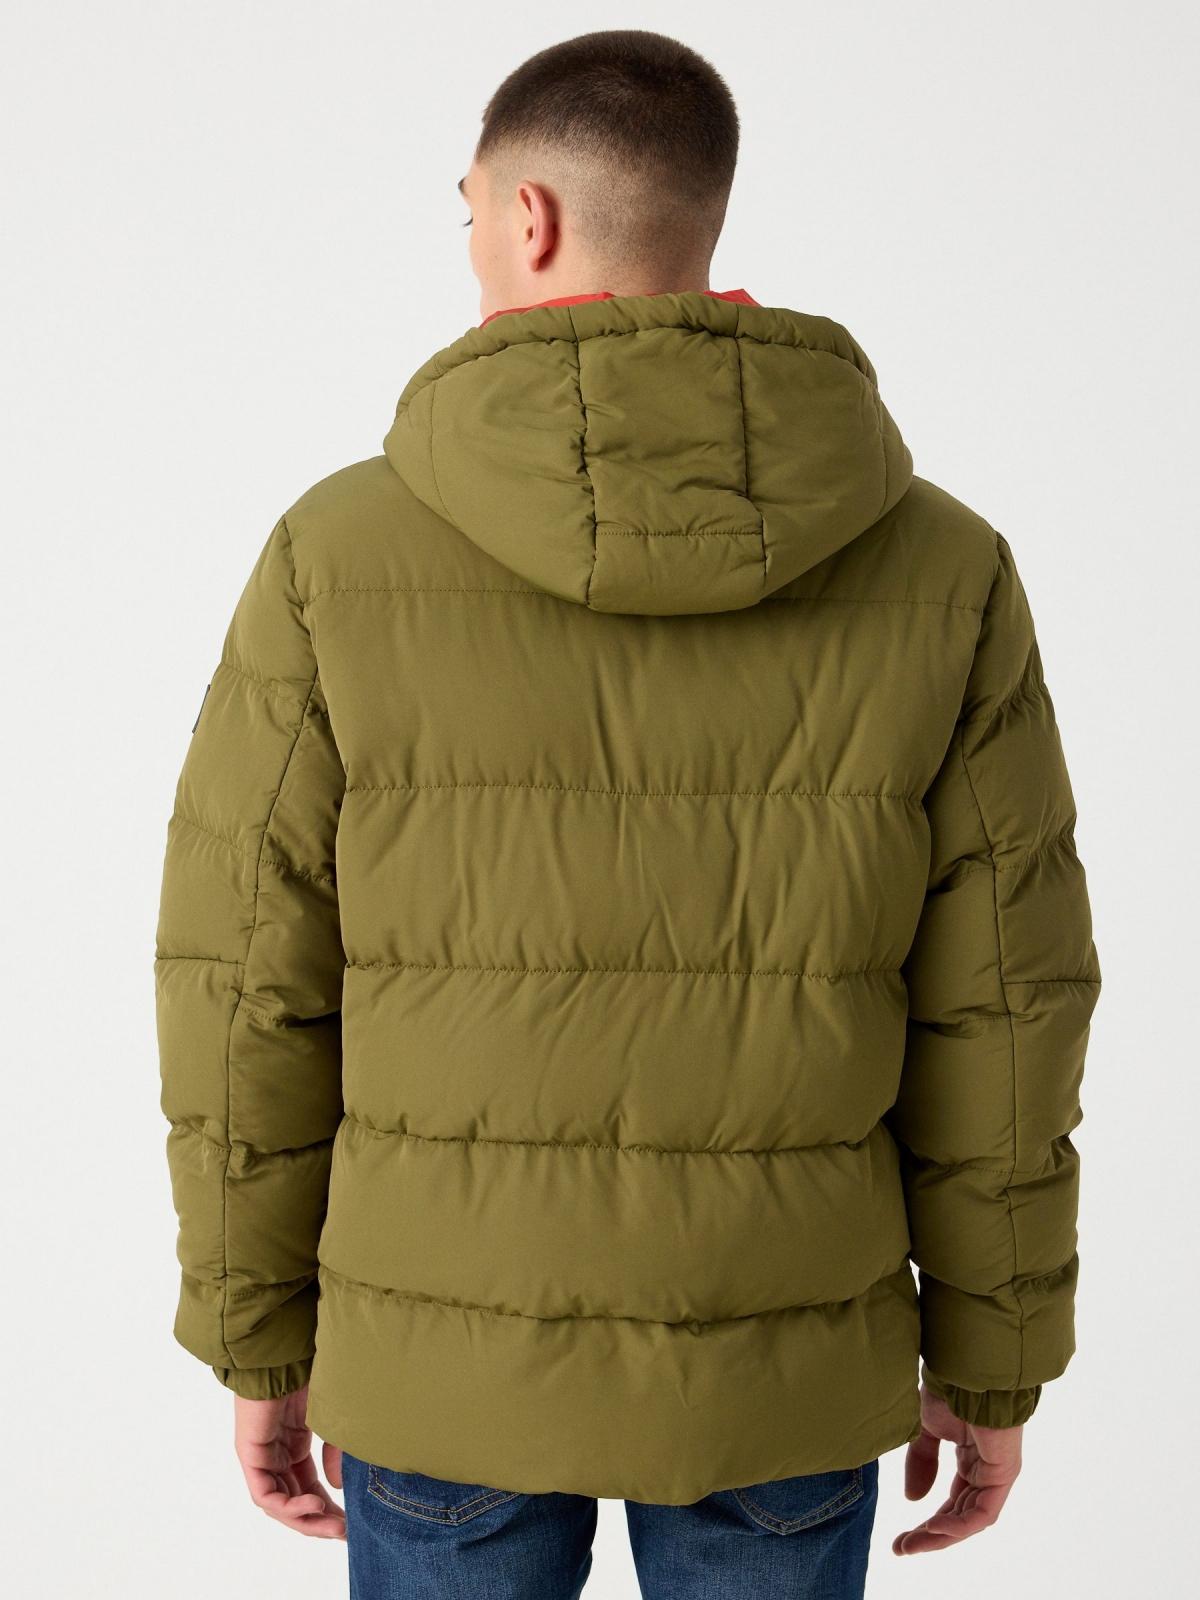 Contrast padded jacket khaki middle back view